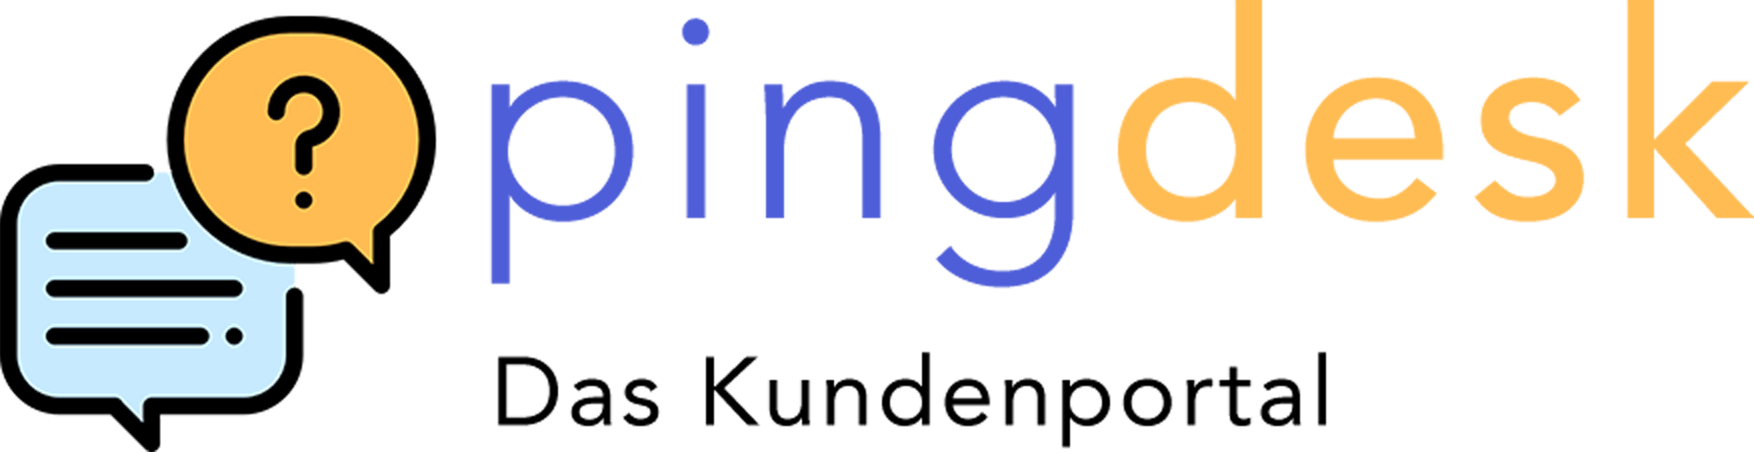 tiponme Community Portal Logo